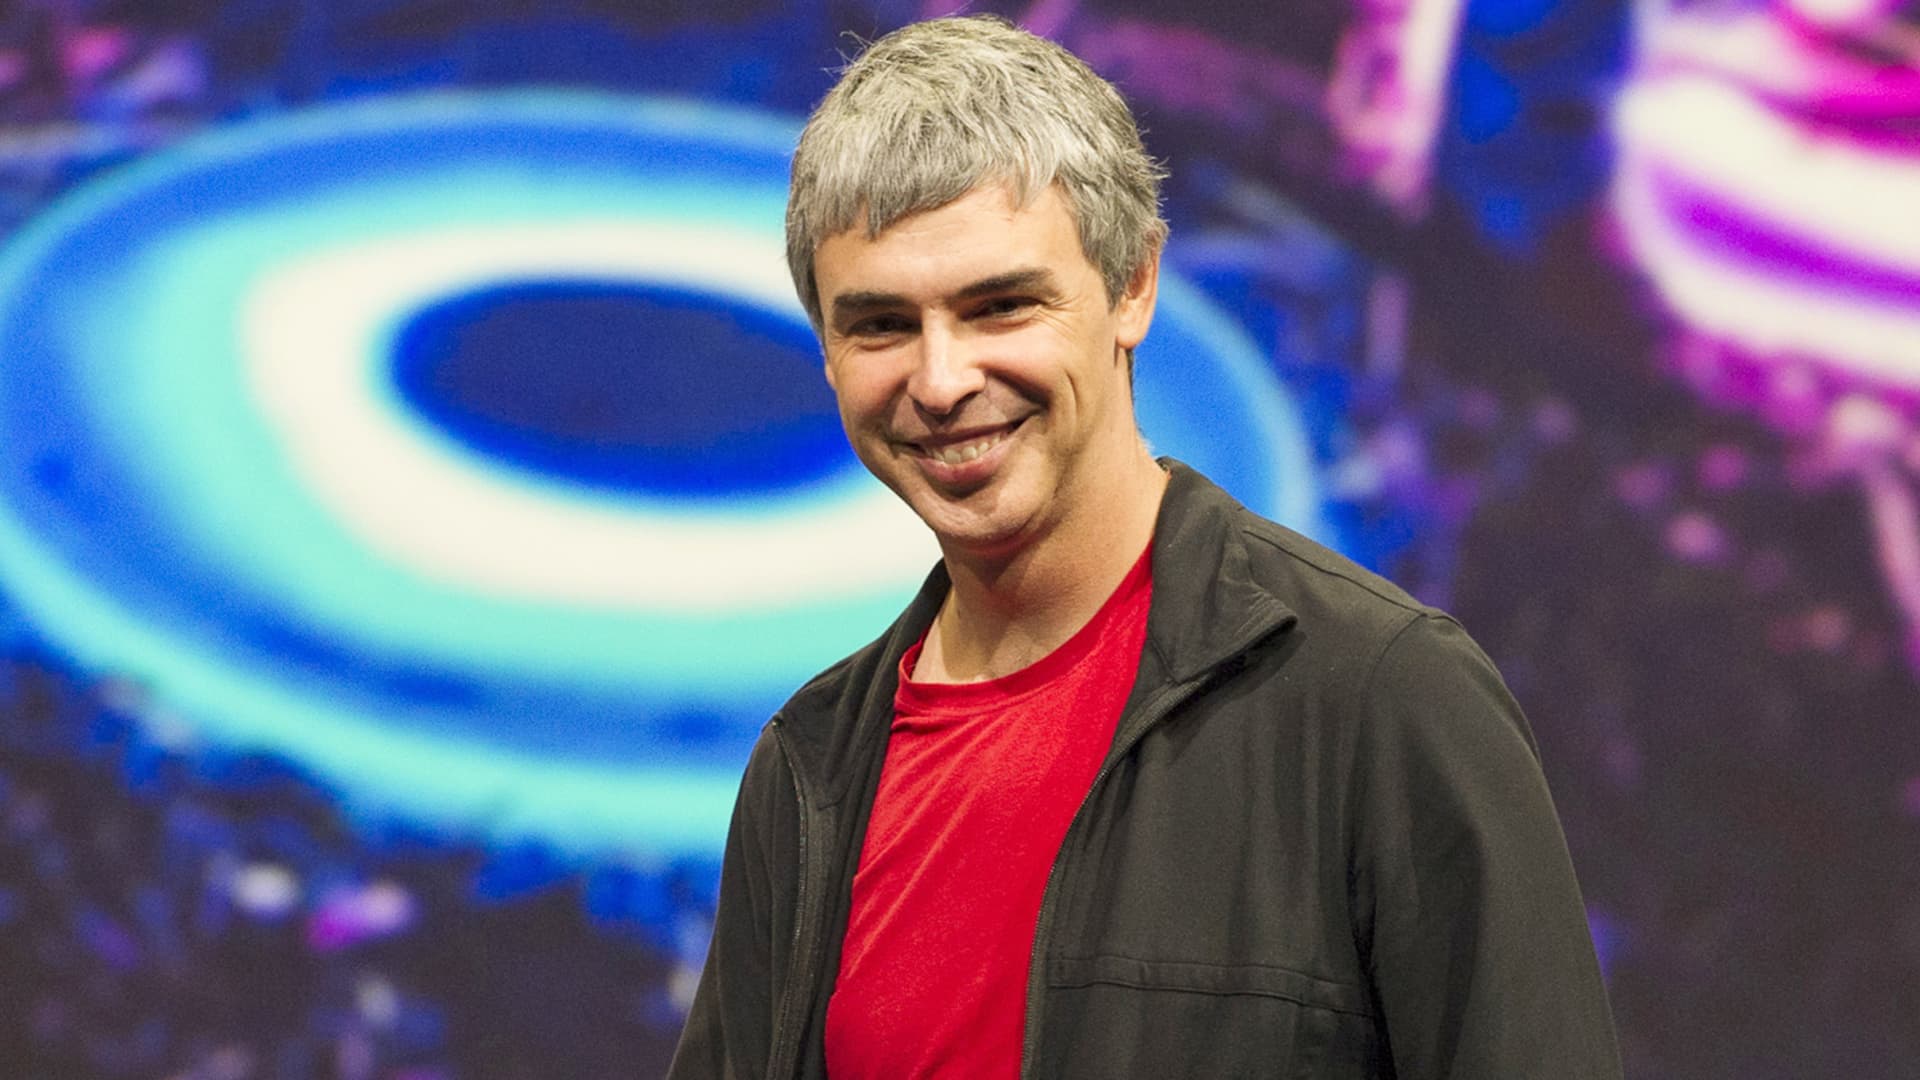 Google co-founder Larry Page subpoena in Jeffrey Epstein case